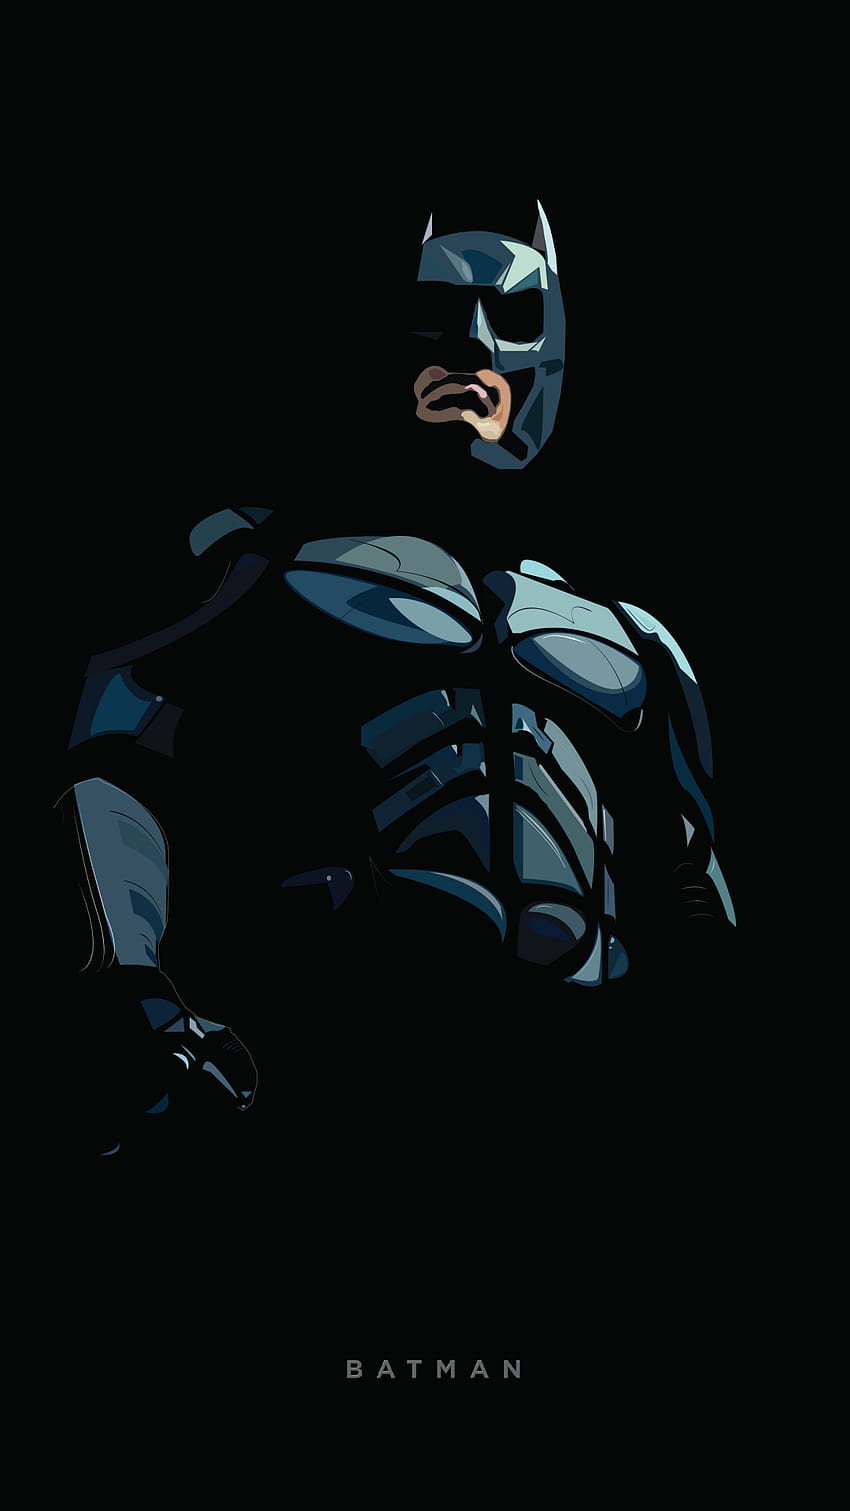 DC AMOLED, batman hitam amoled wallpaper ponsel HD